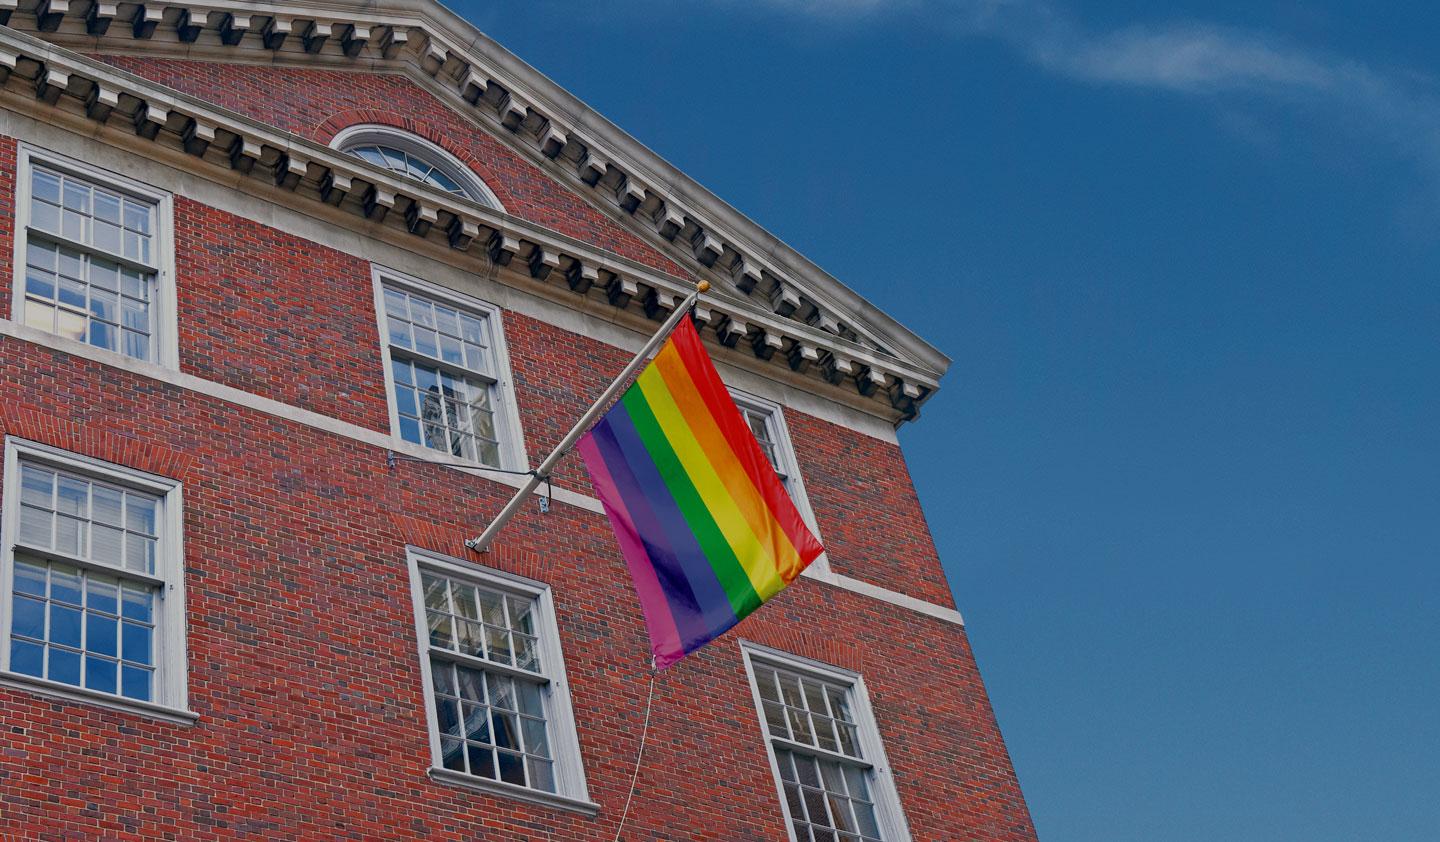 Vanderbilt Hall with a Pride flag